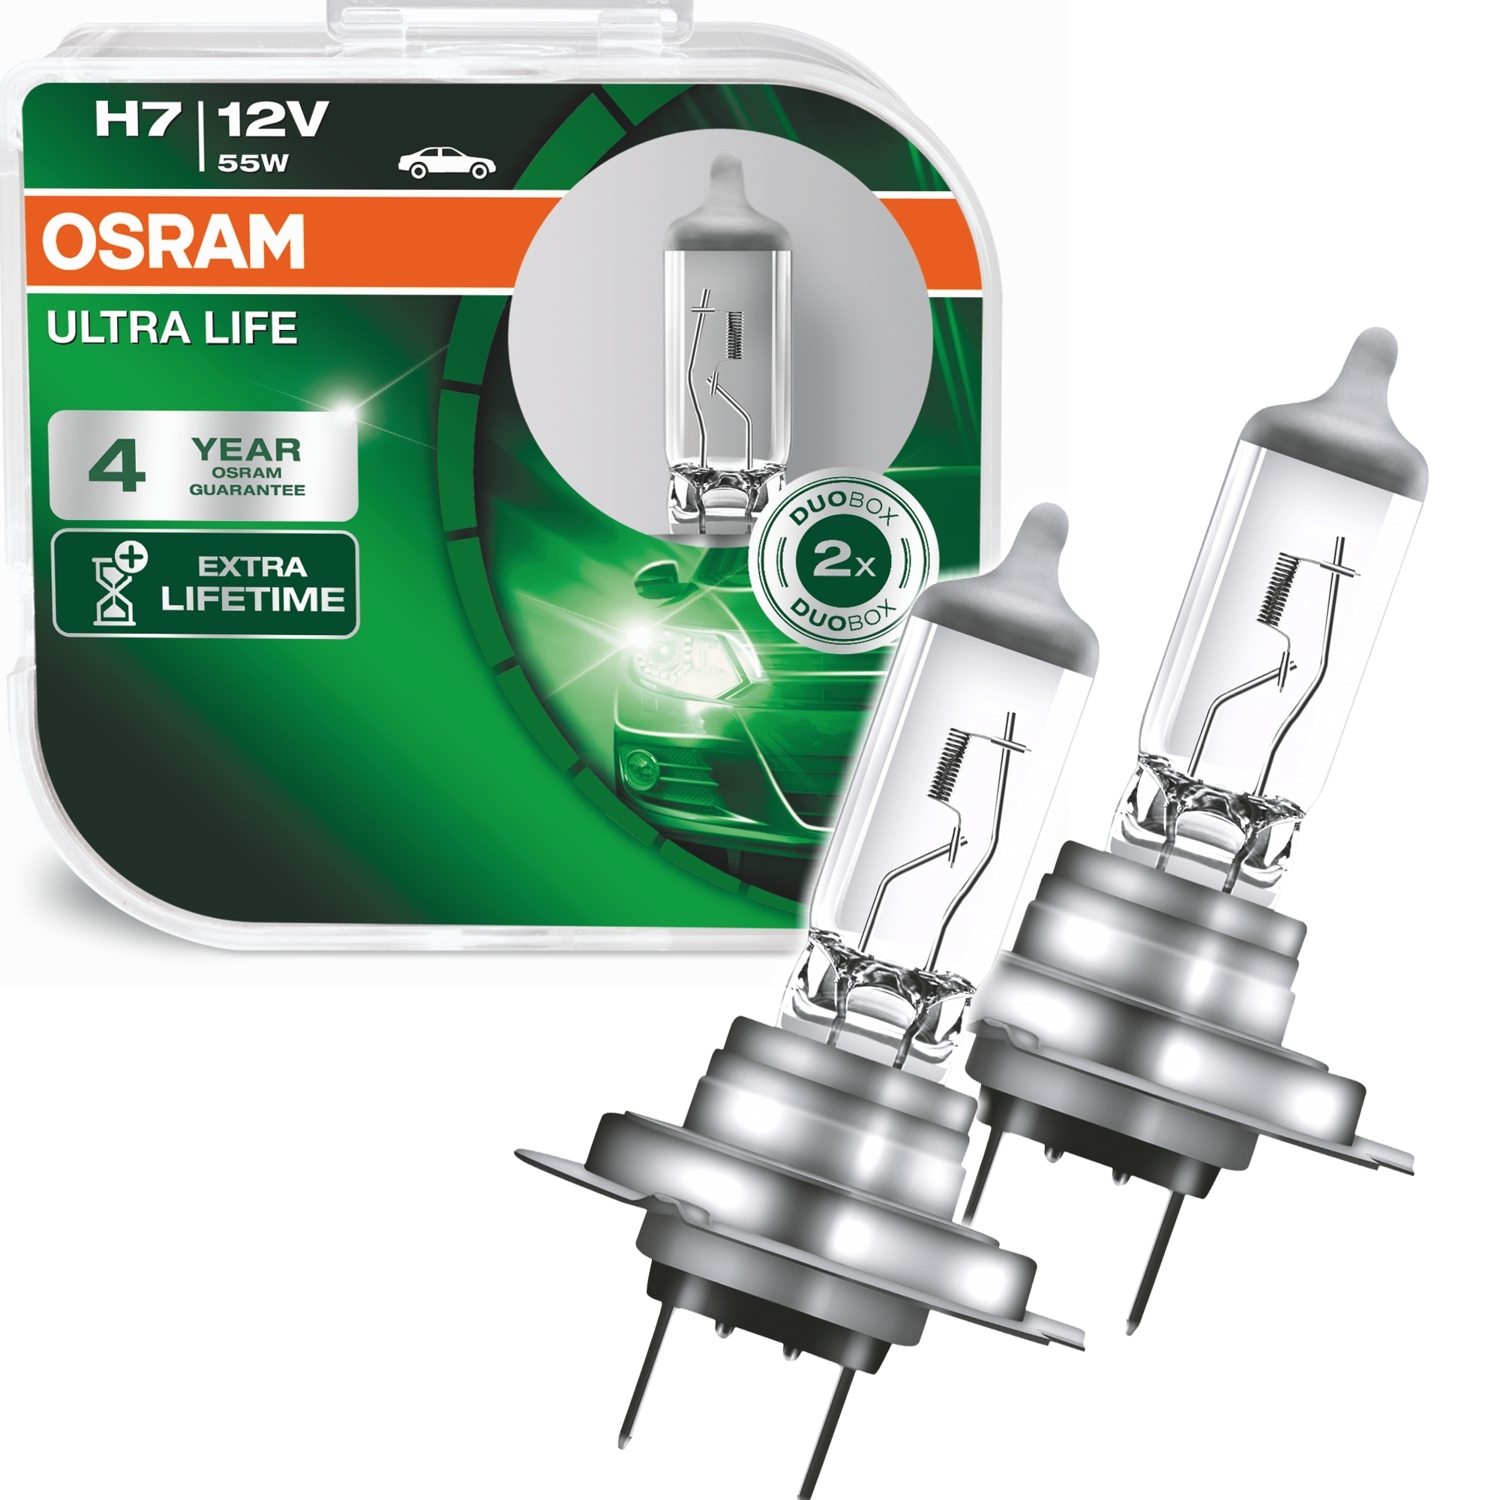 OSRAM H7 12V 55W Ultra Life